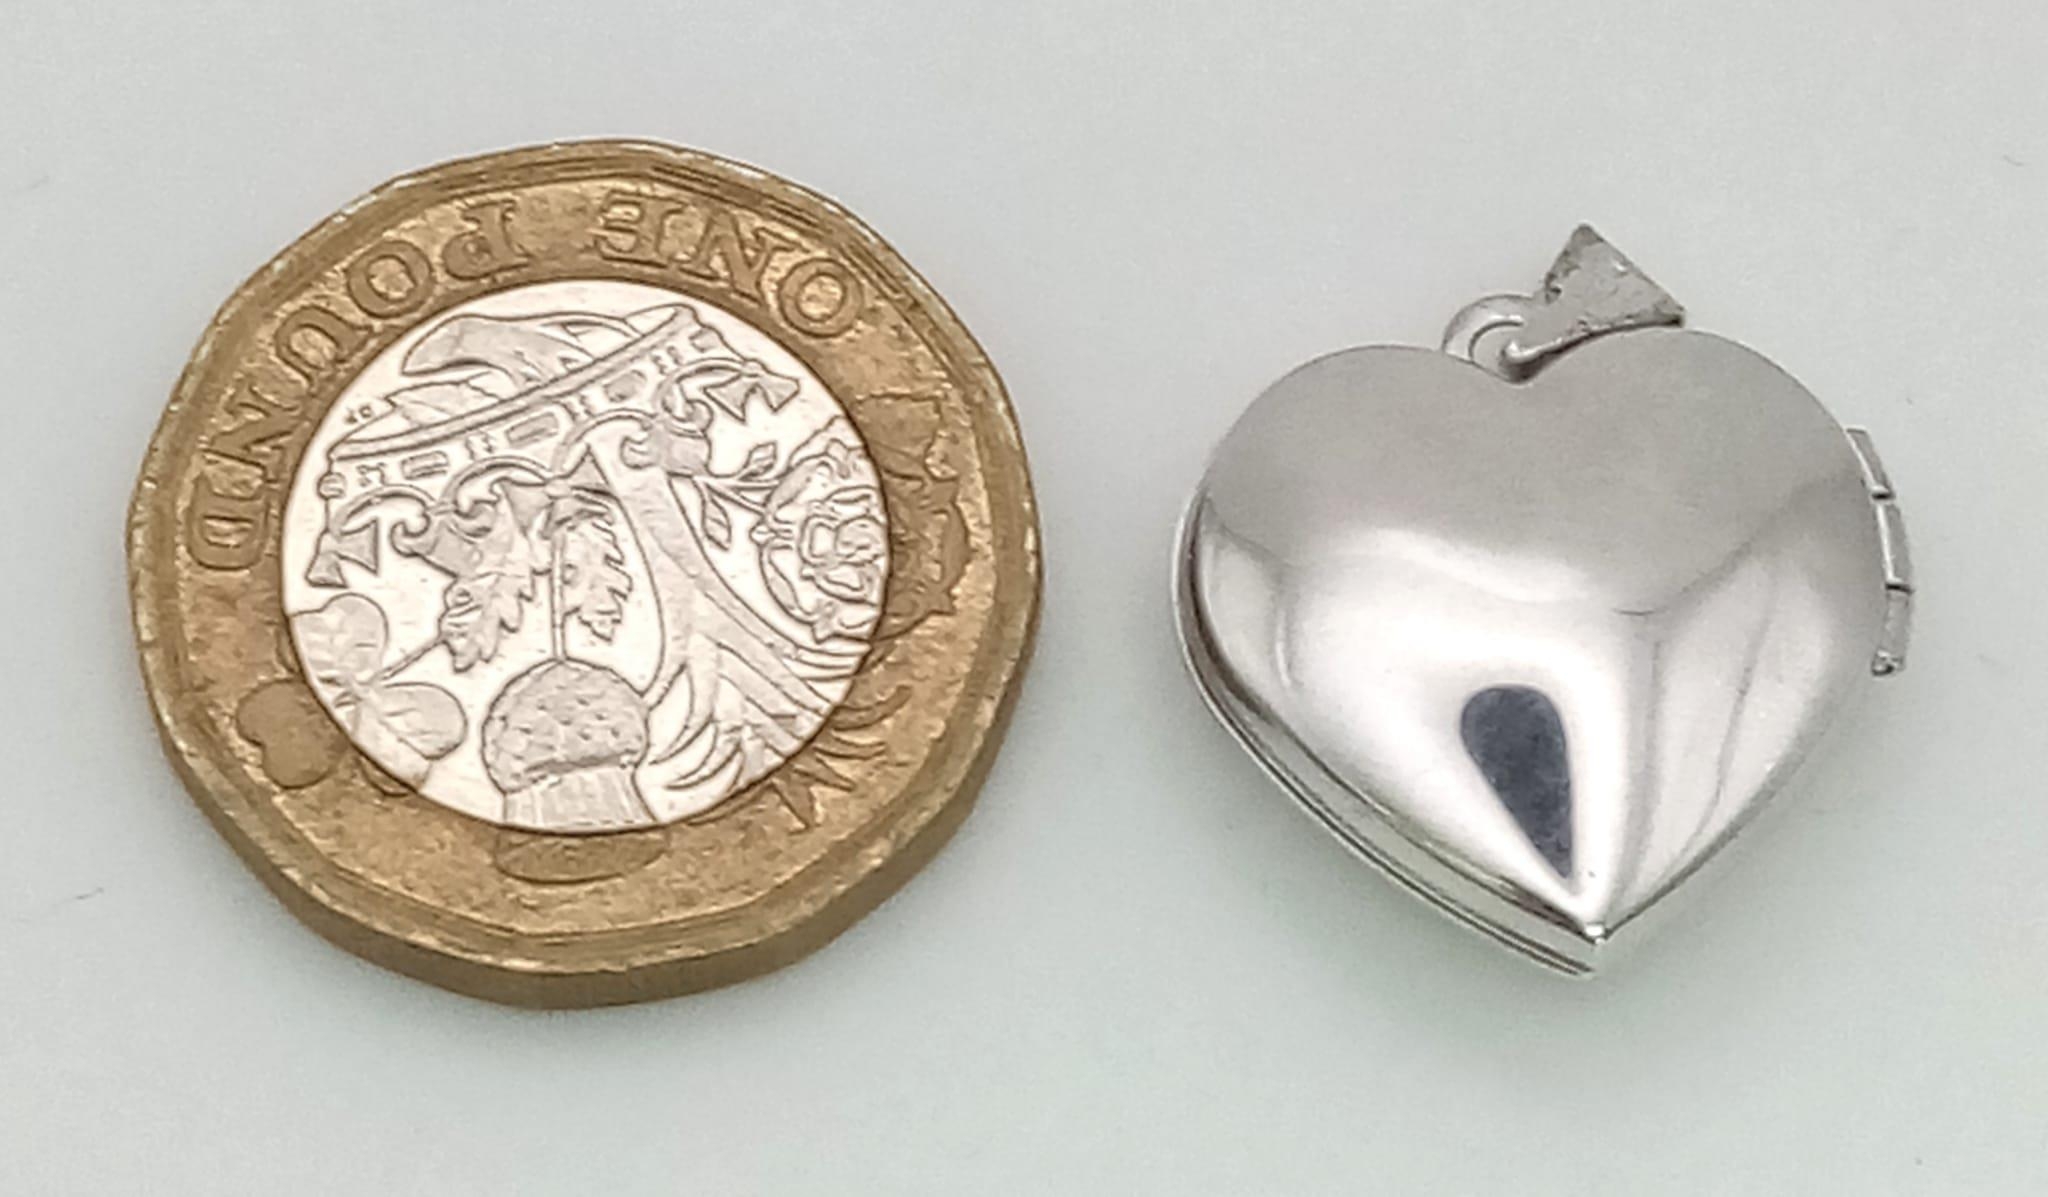 9k white gold stone set heart locket pendant weighs 1.51g - Image 3 of 4